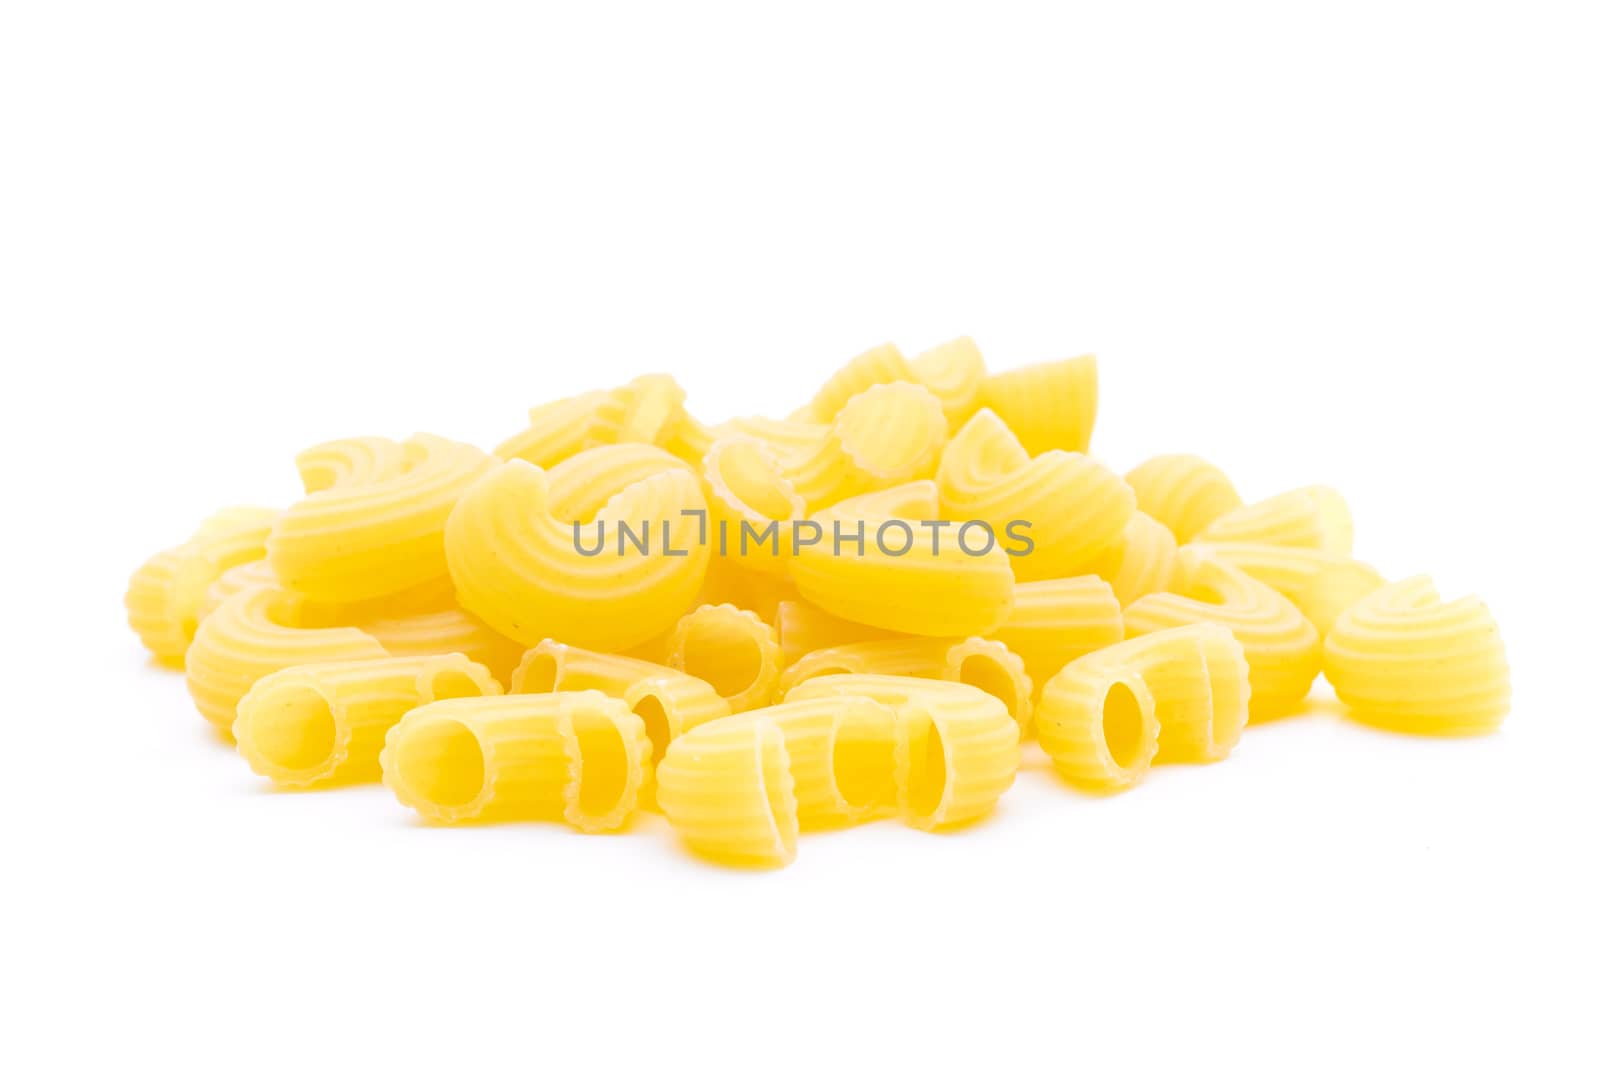 Raw macaroni on white background by sompongtom